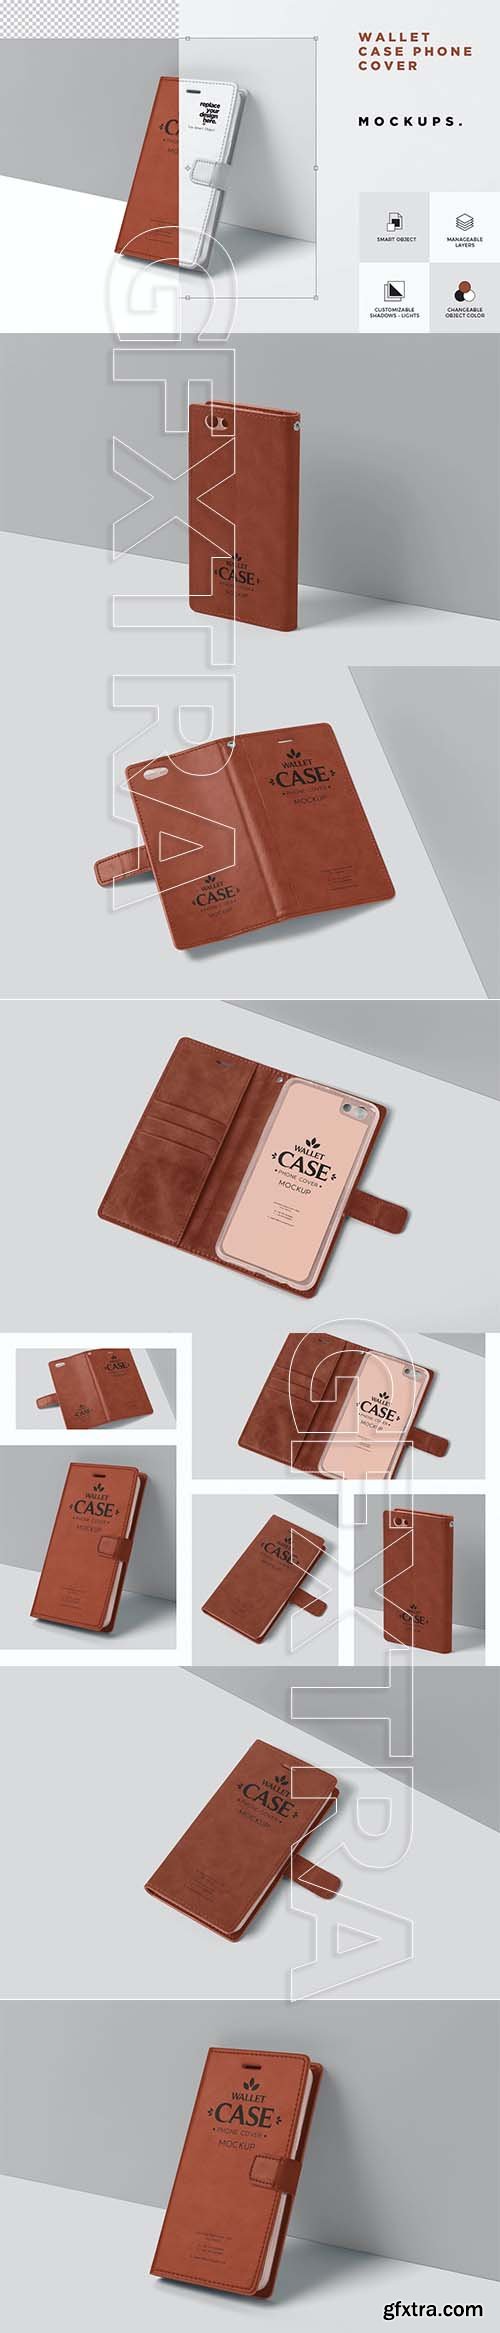 Wallet Case Phone Cover Mockups